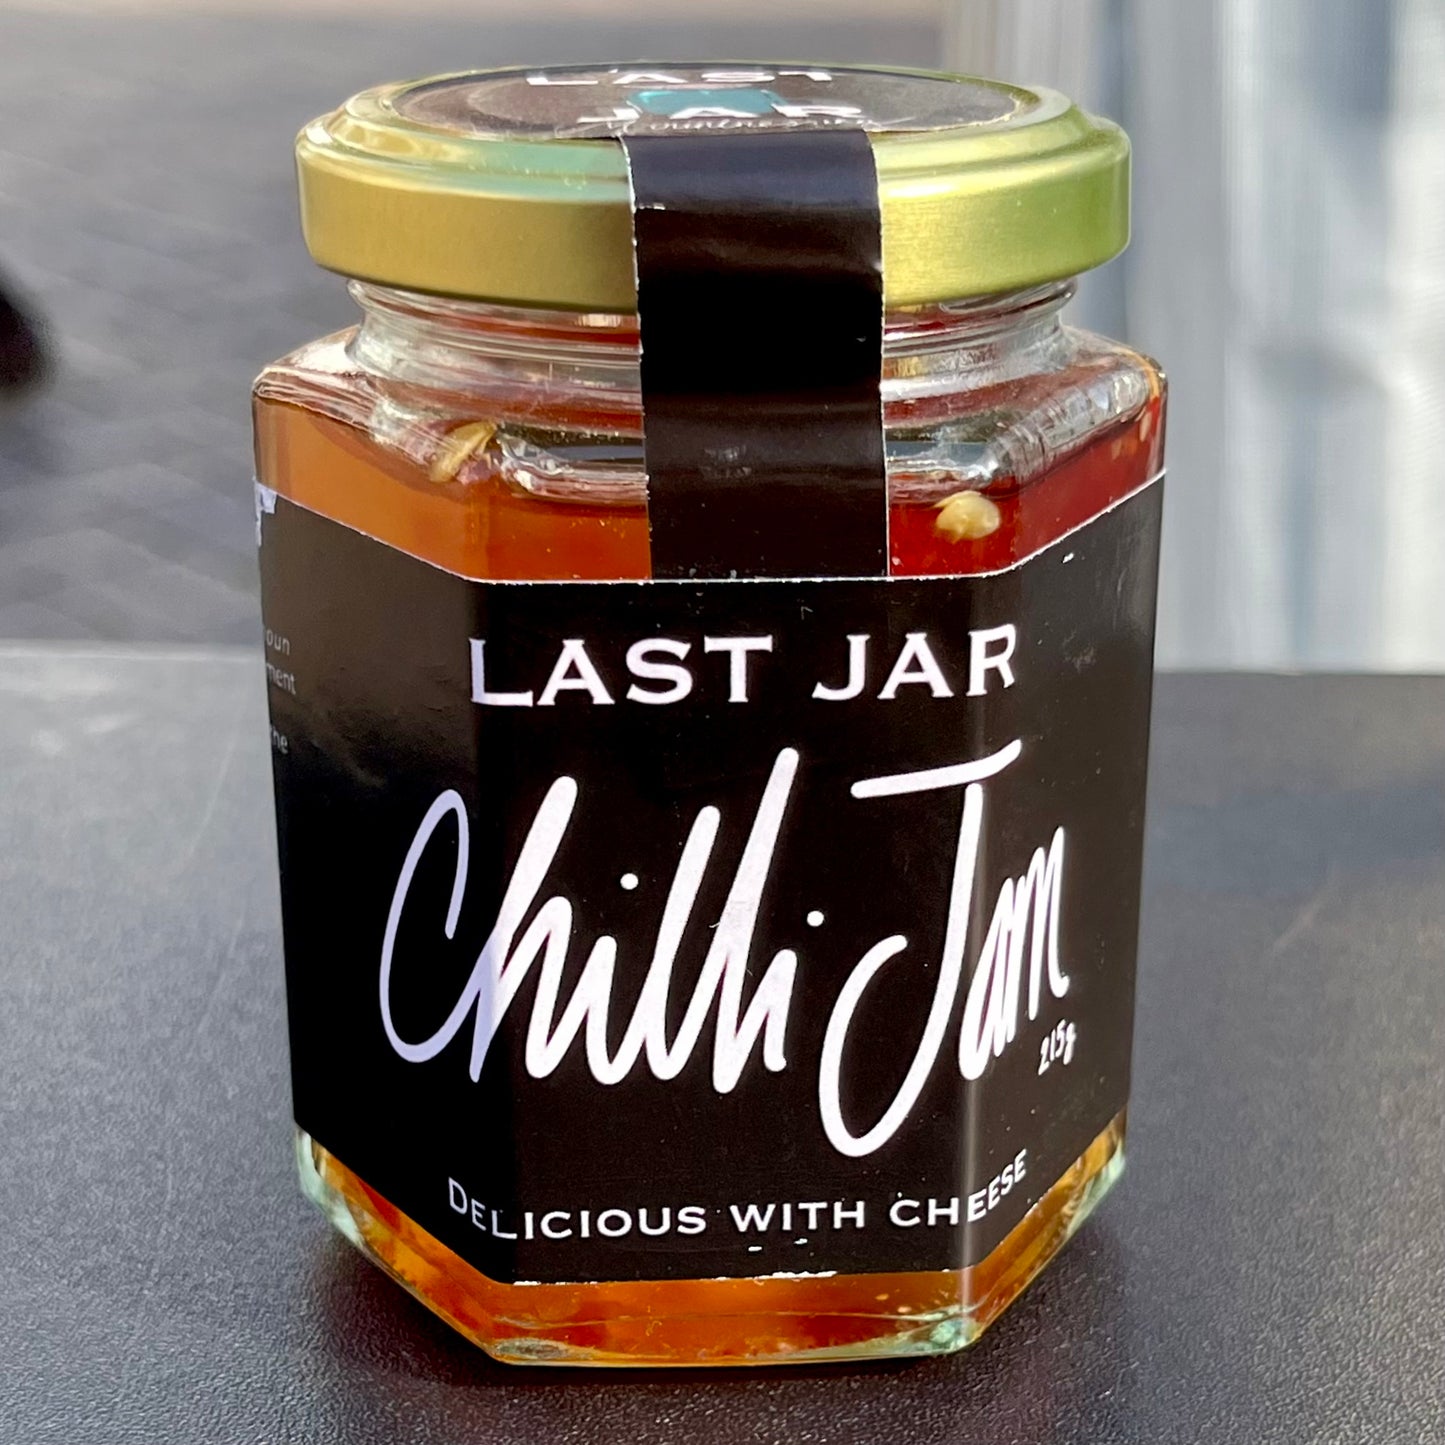 Last Jar Chilli Jam